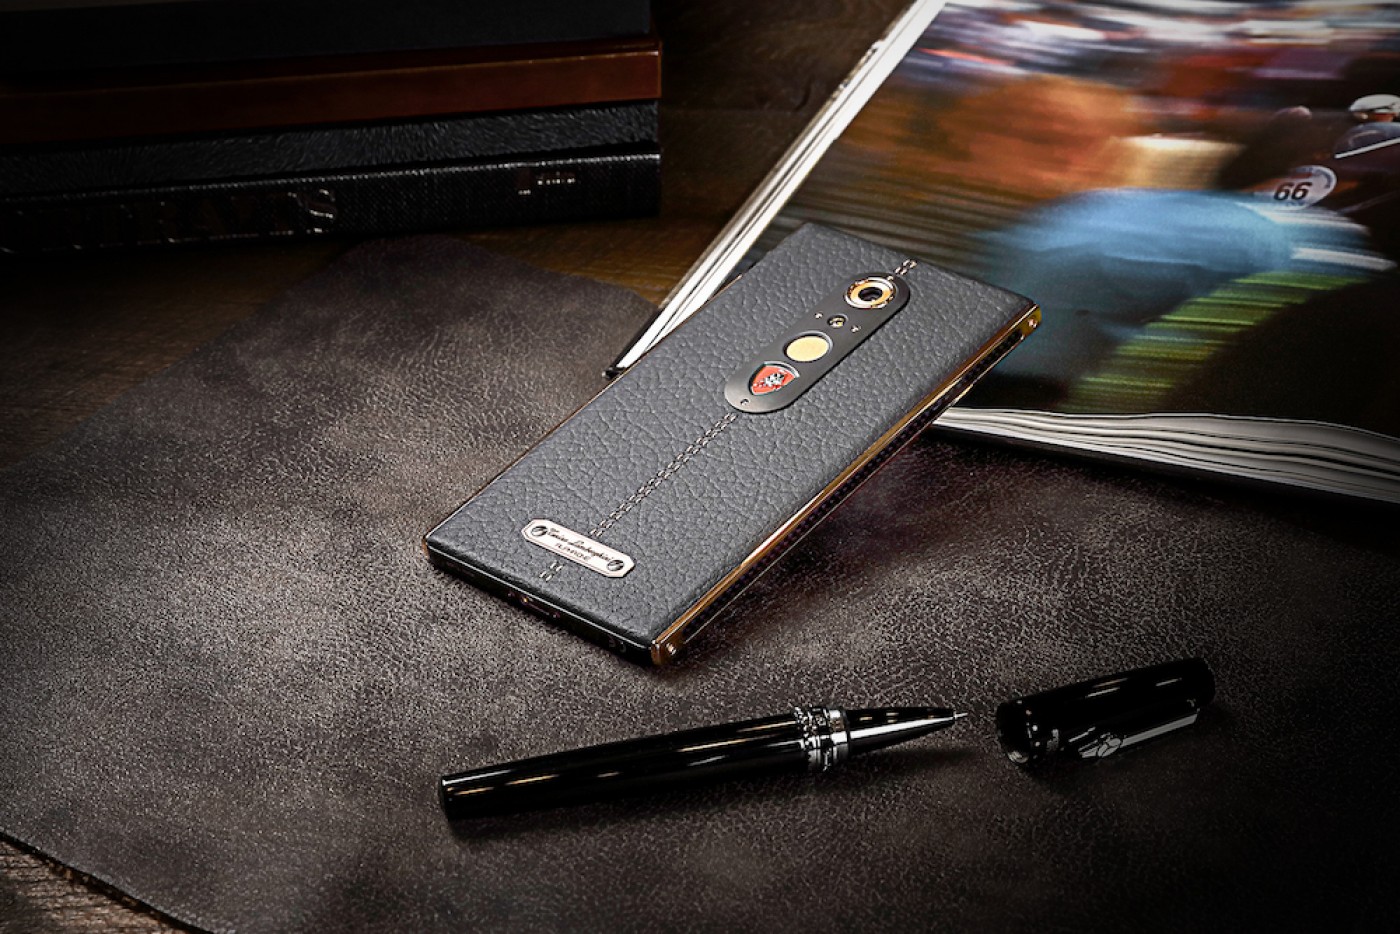 Alpha-One گوشی هوشمند و لوکس لامبورگینی با قیمت 2450 دلار معرفی شد